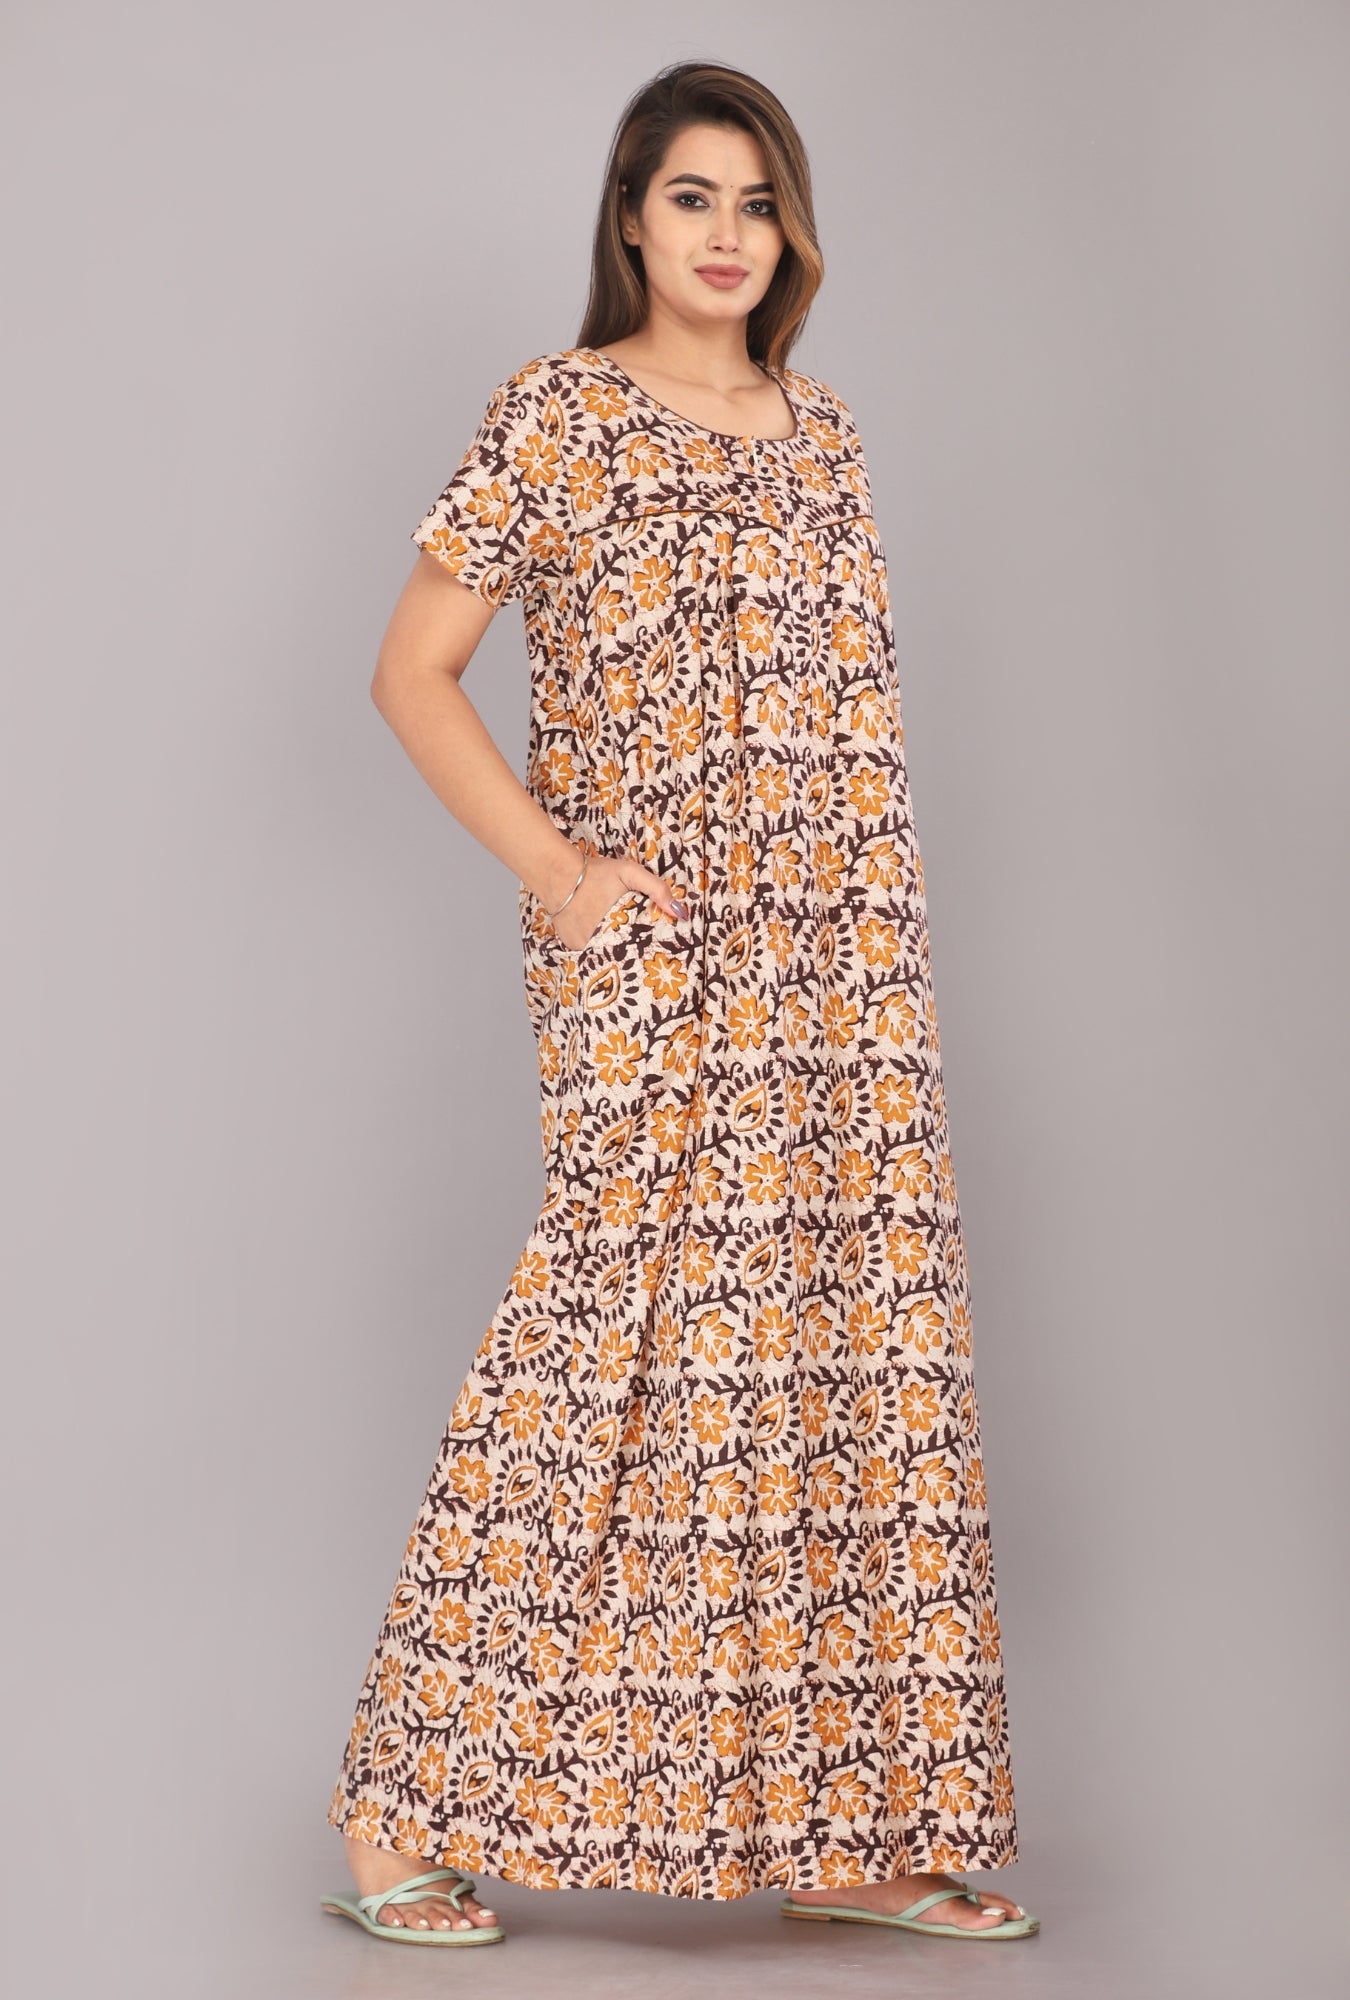 Batik Flower Coffee Cotton Printed Nightwear Gowns